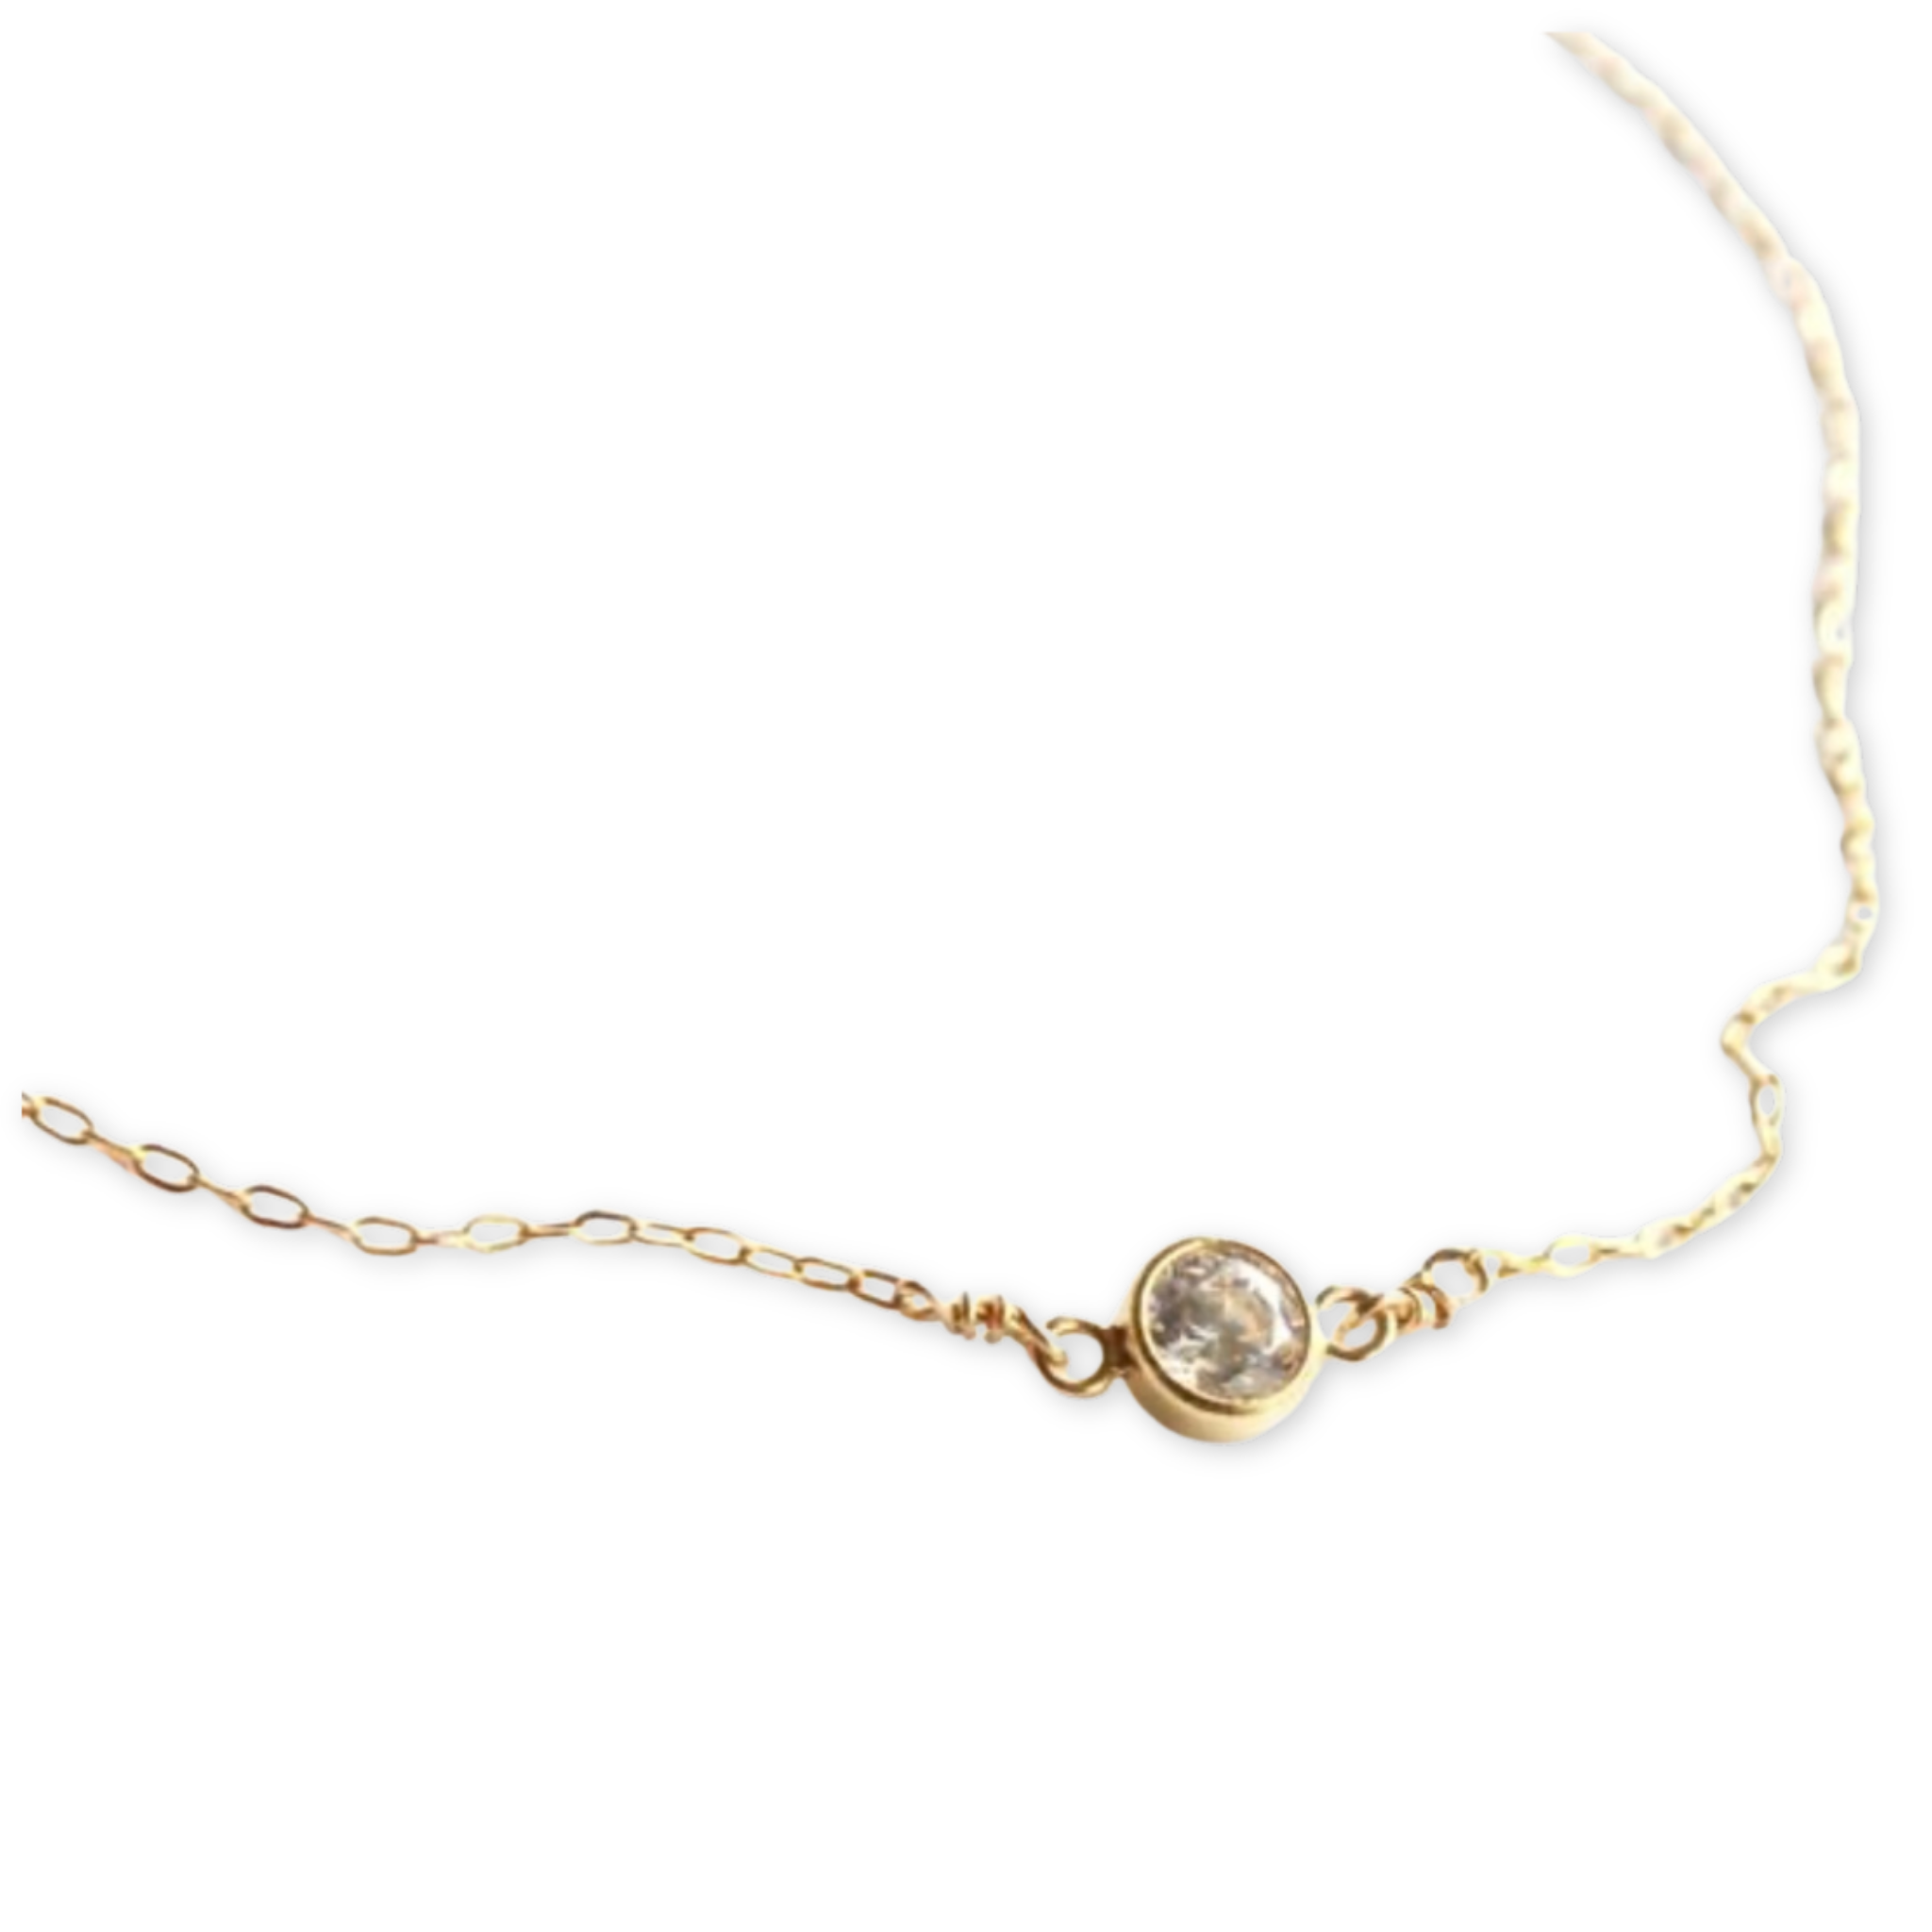 delicate chain with cubic zirconia pendant 